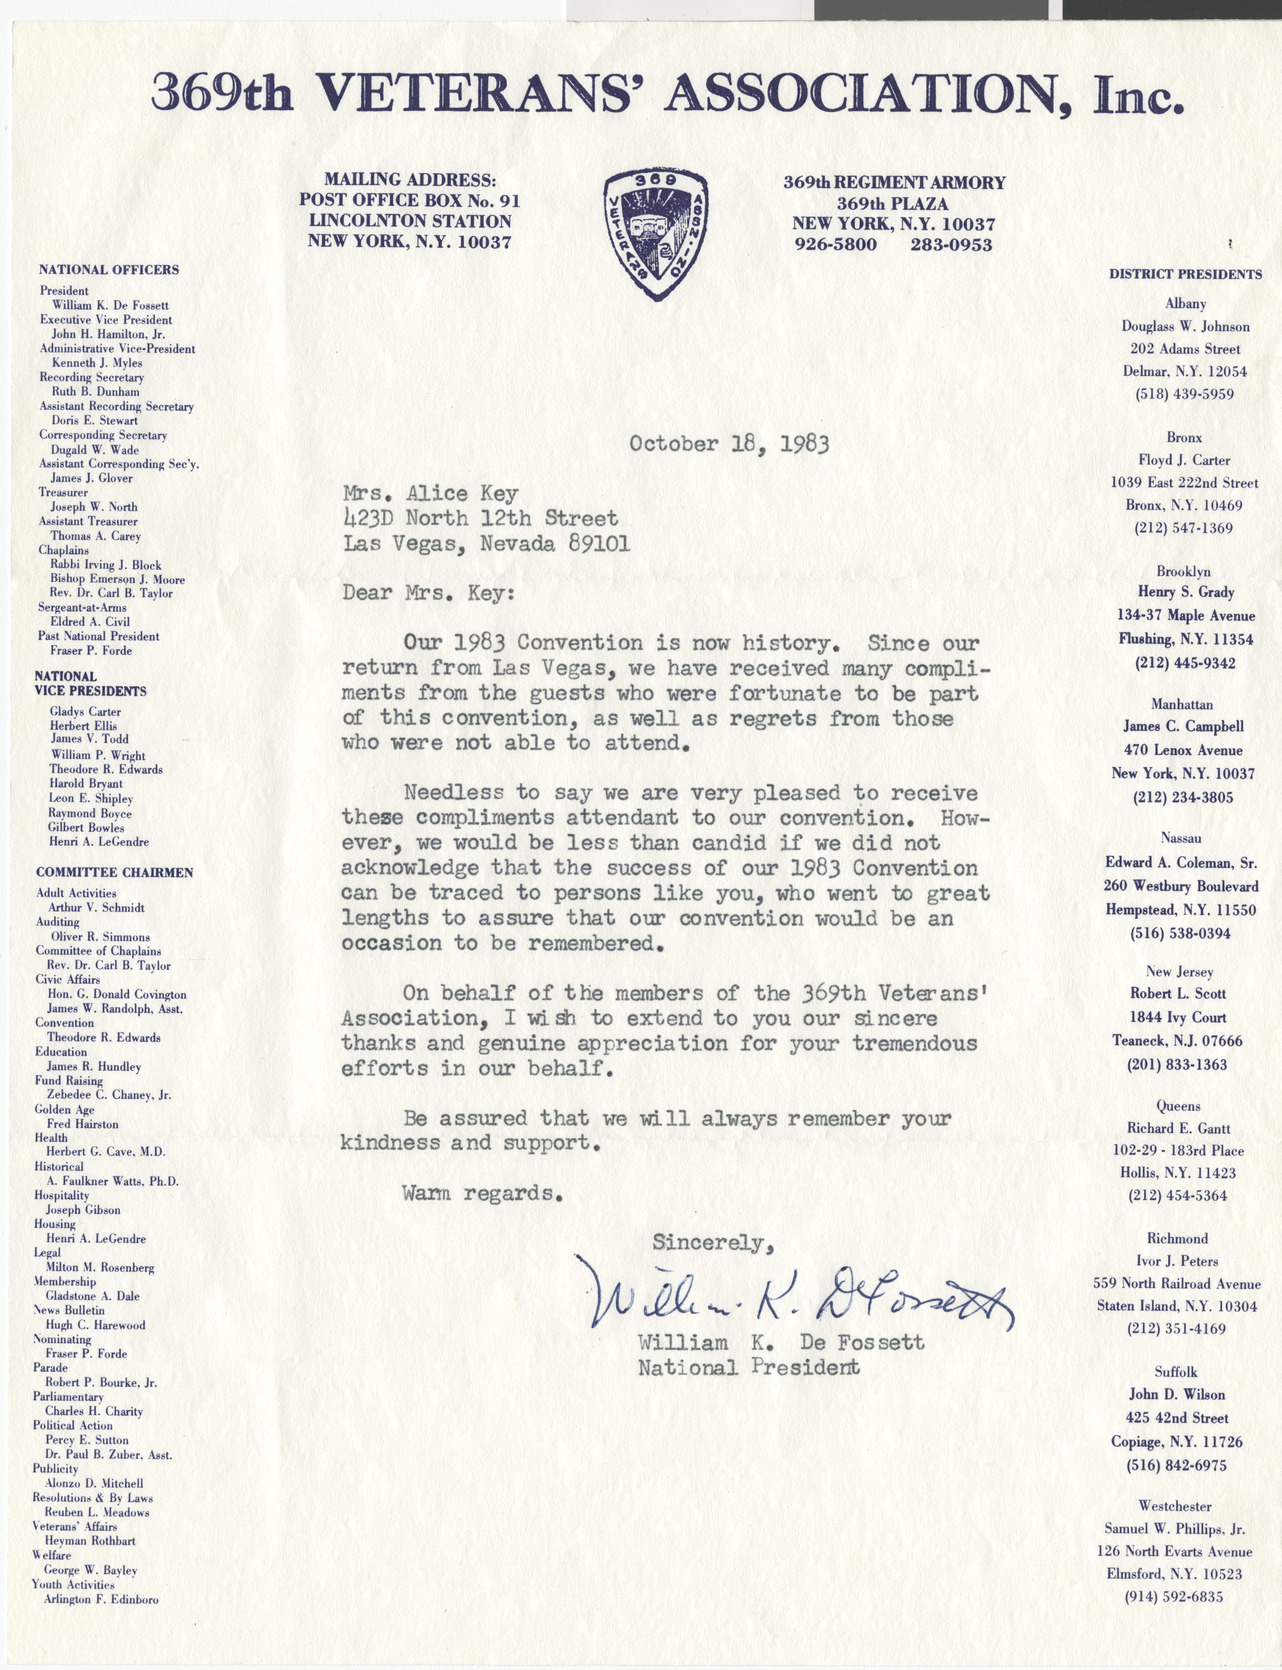 Letter from Willam De Fossett, 369th Veterans' Association, to Alice Key, 1983